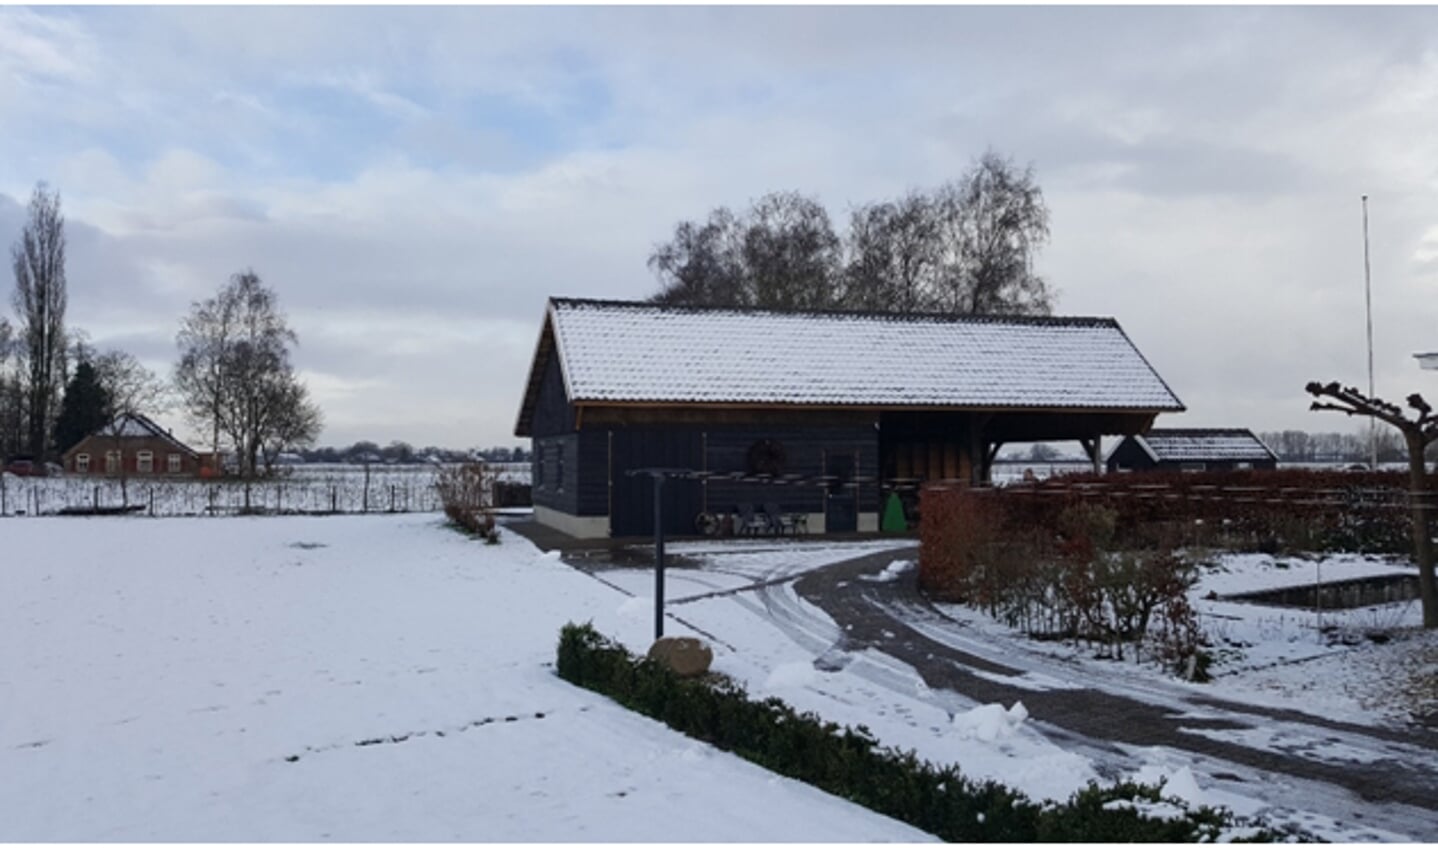 Winterwandeling start in Toldijk. Foto: PR